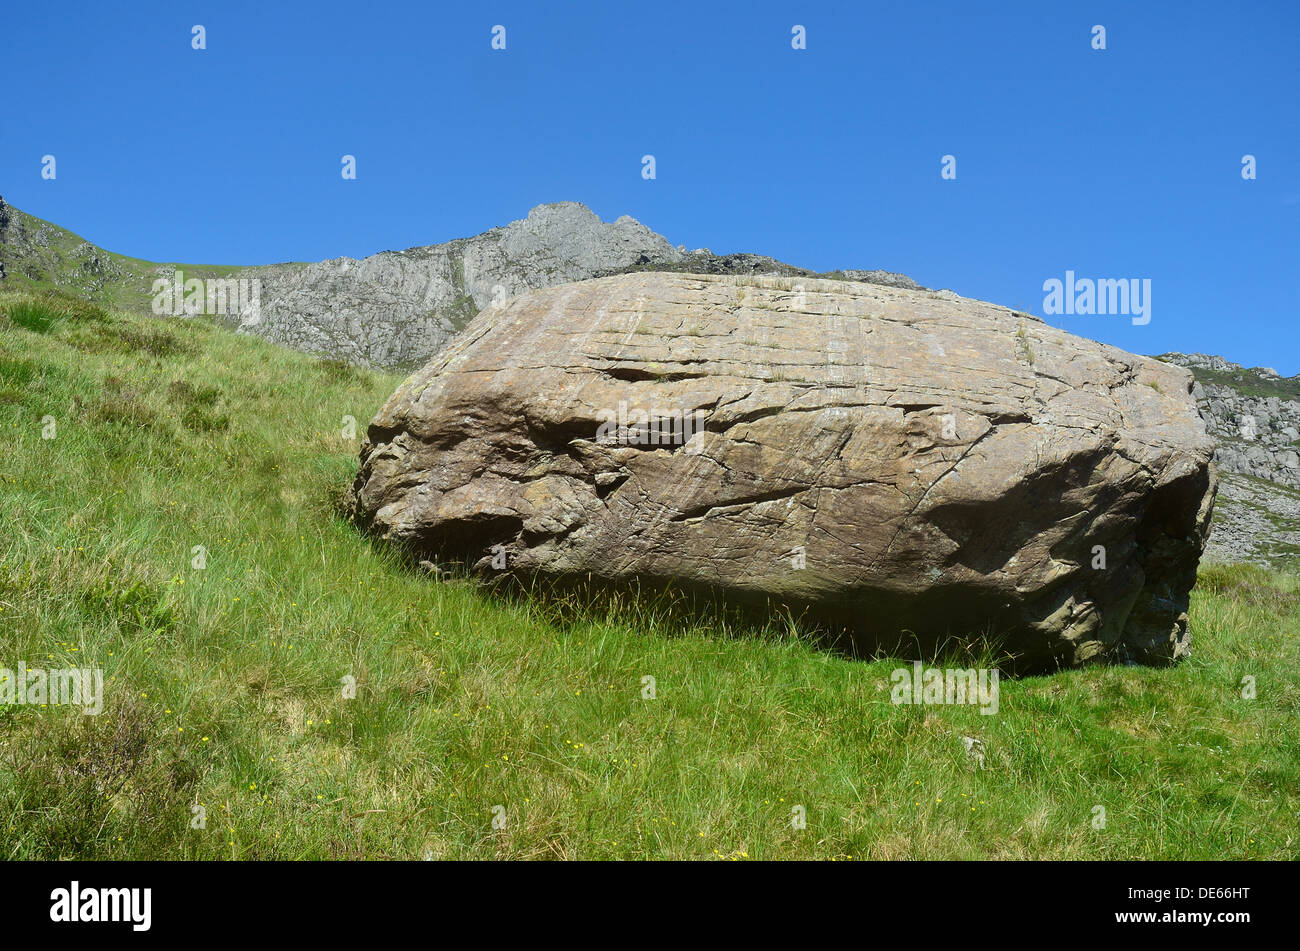 Rock on a grassy slope Stock Photo